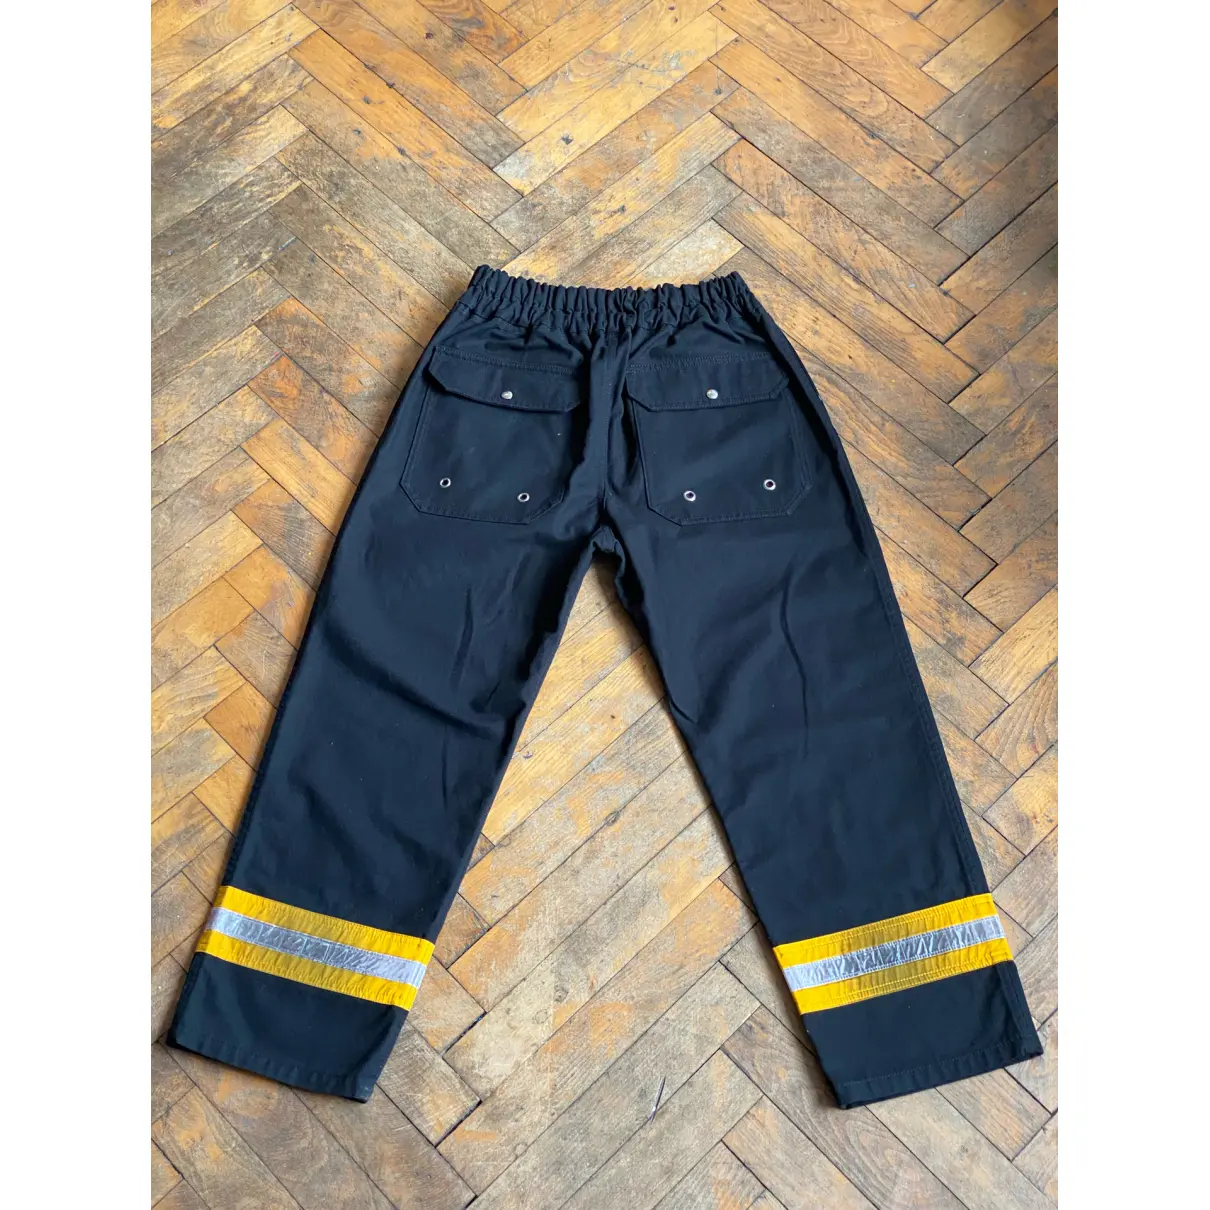 Buy Calvin Klein 205W39NYC Trousers online